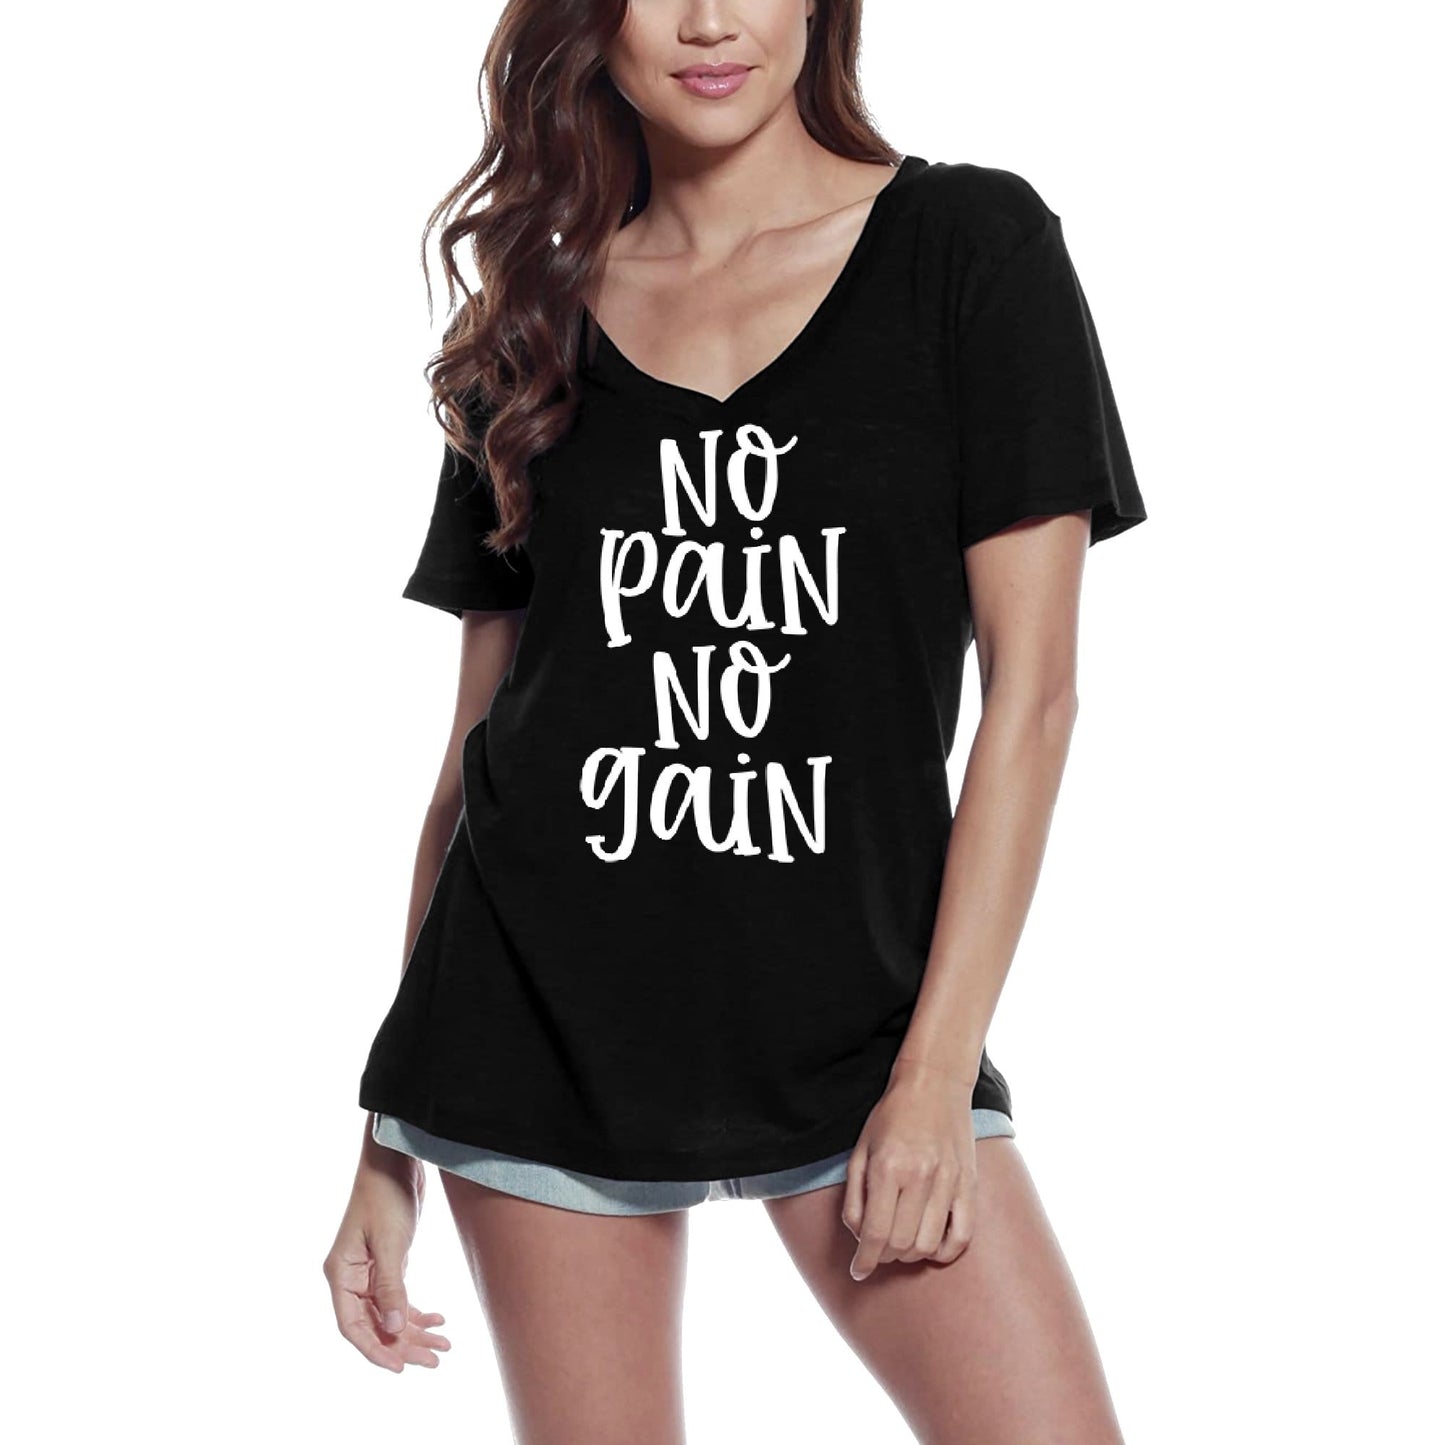 ULTRABASIC Women's Novelty T-Shirt No Pain No Gain - Funny Motivational Quote